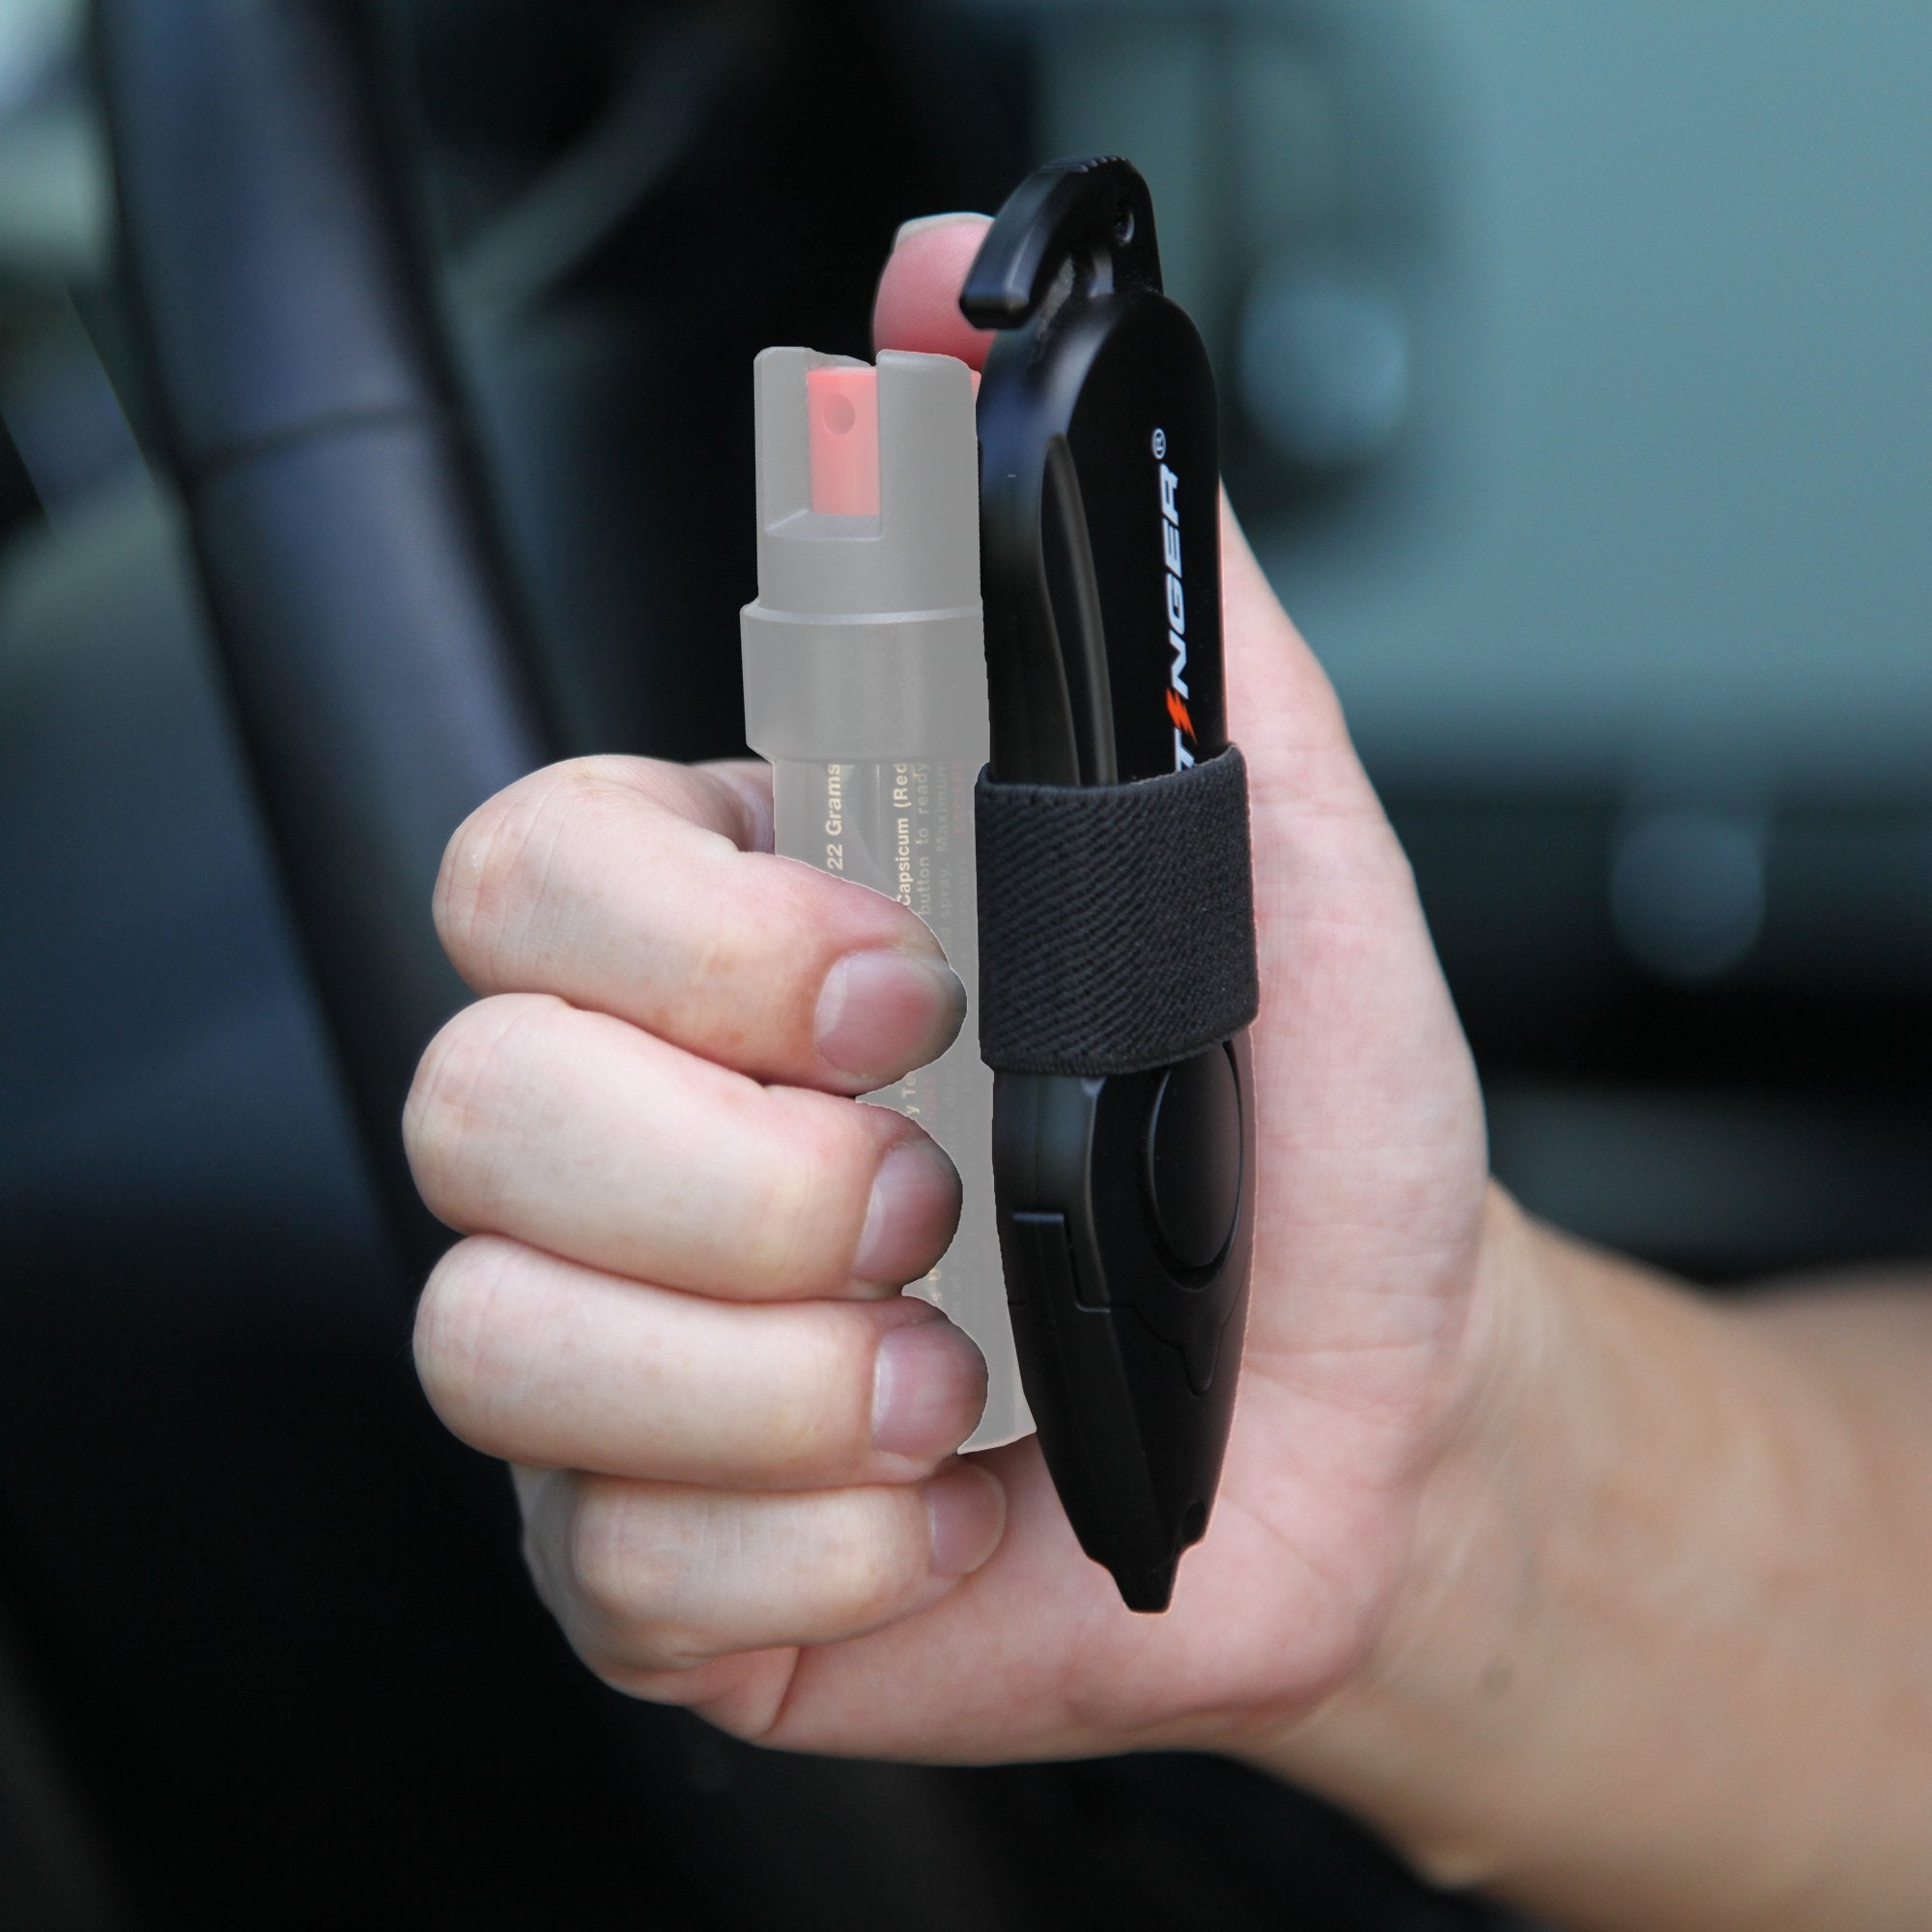 Personal Alarm Emergency Tool: Safety Alarm, Seat Belt Cutter, Glass B -  Ztylus